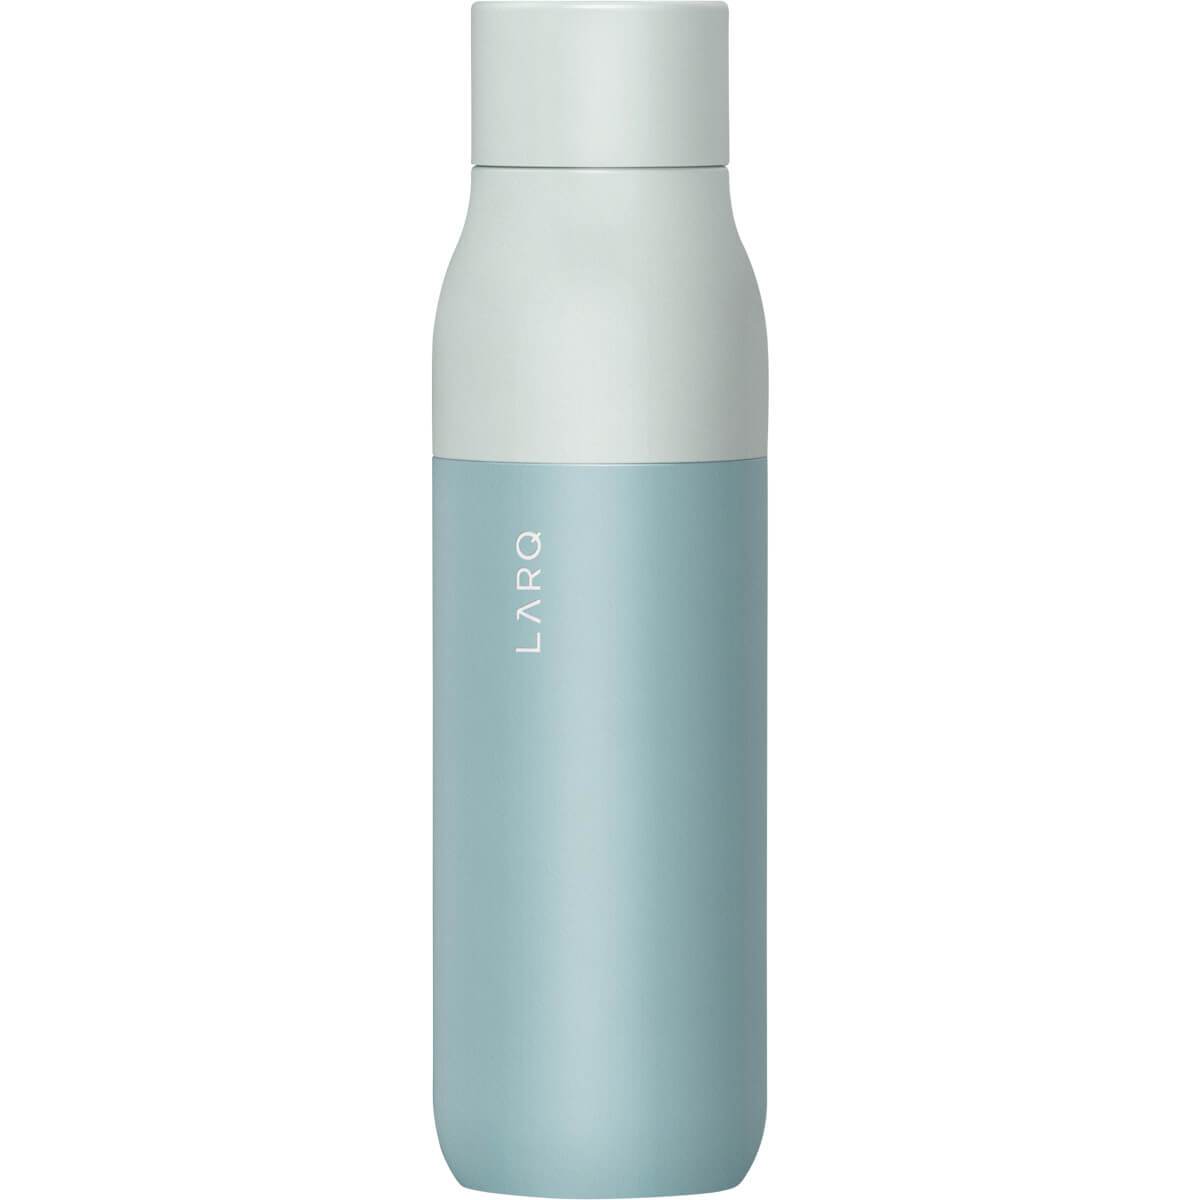 Image of LARQ <BR> Self-Purifying Water Bottle